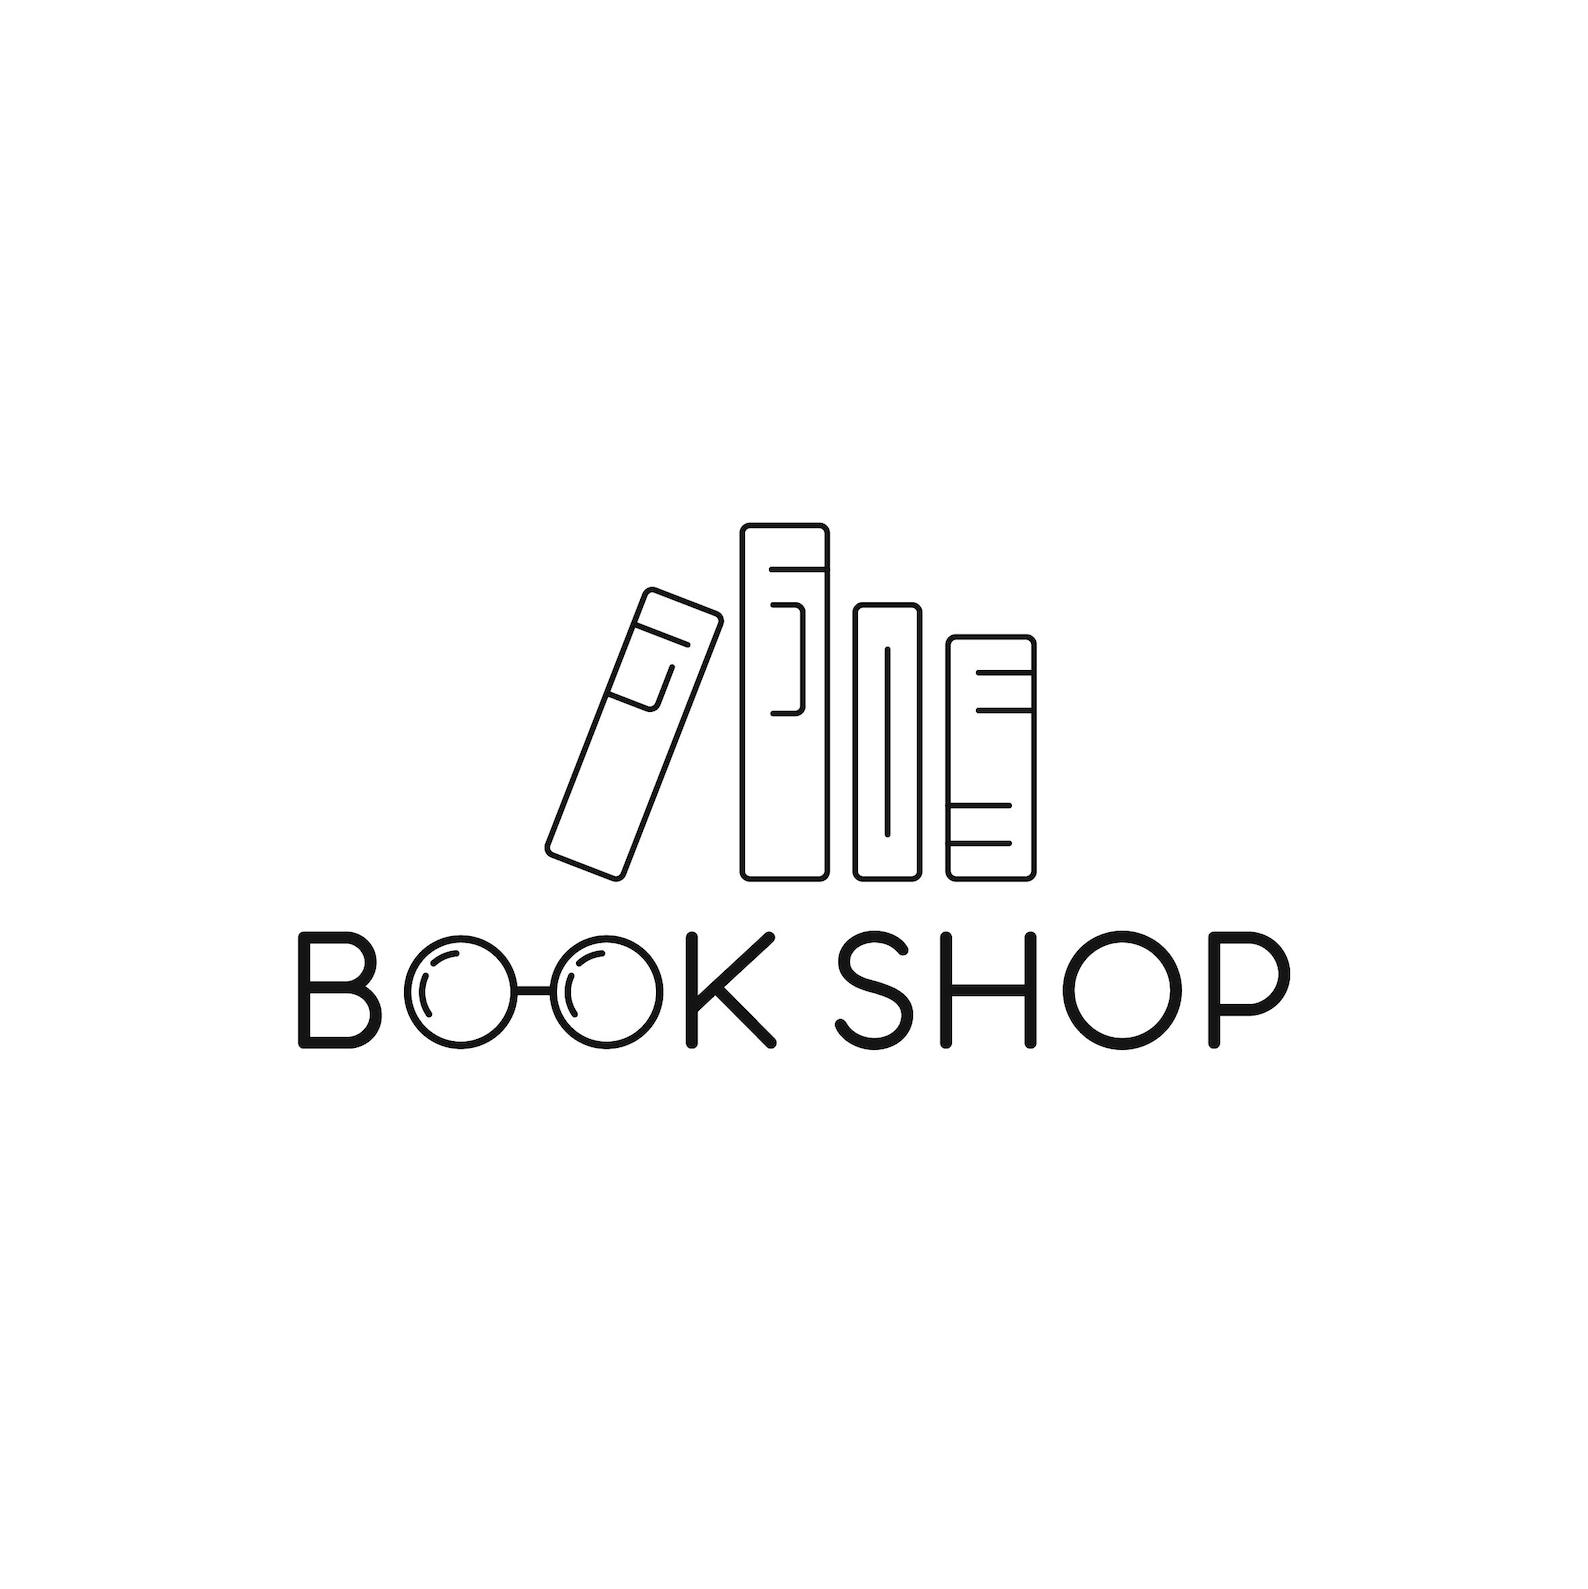 Simple Book Store Line Logo Bespoke Logo Template Design: - Etsy